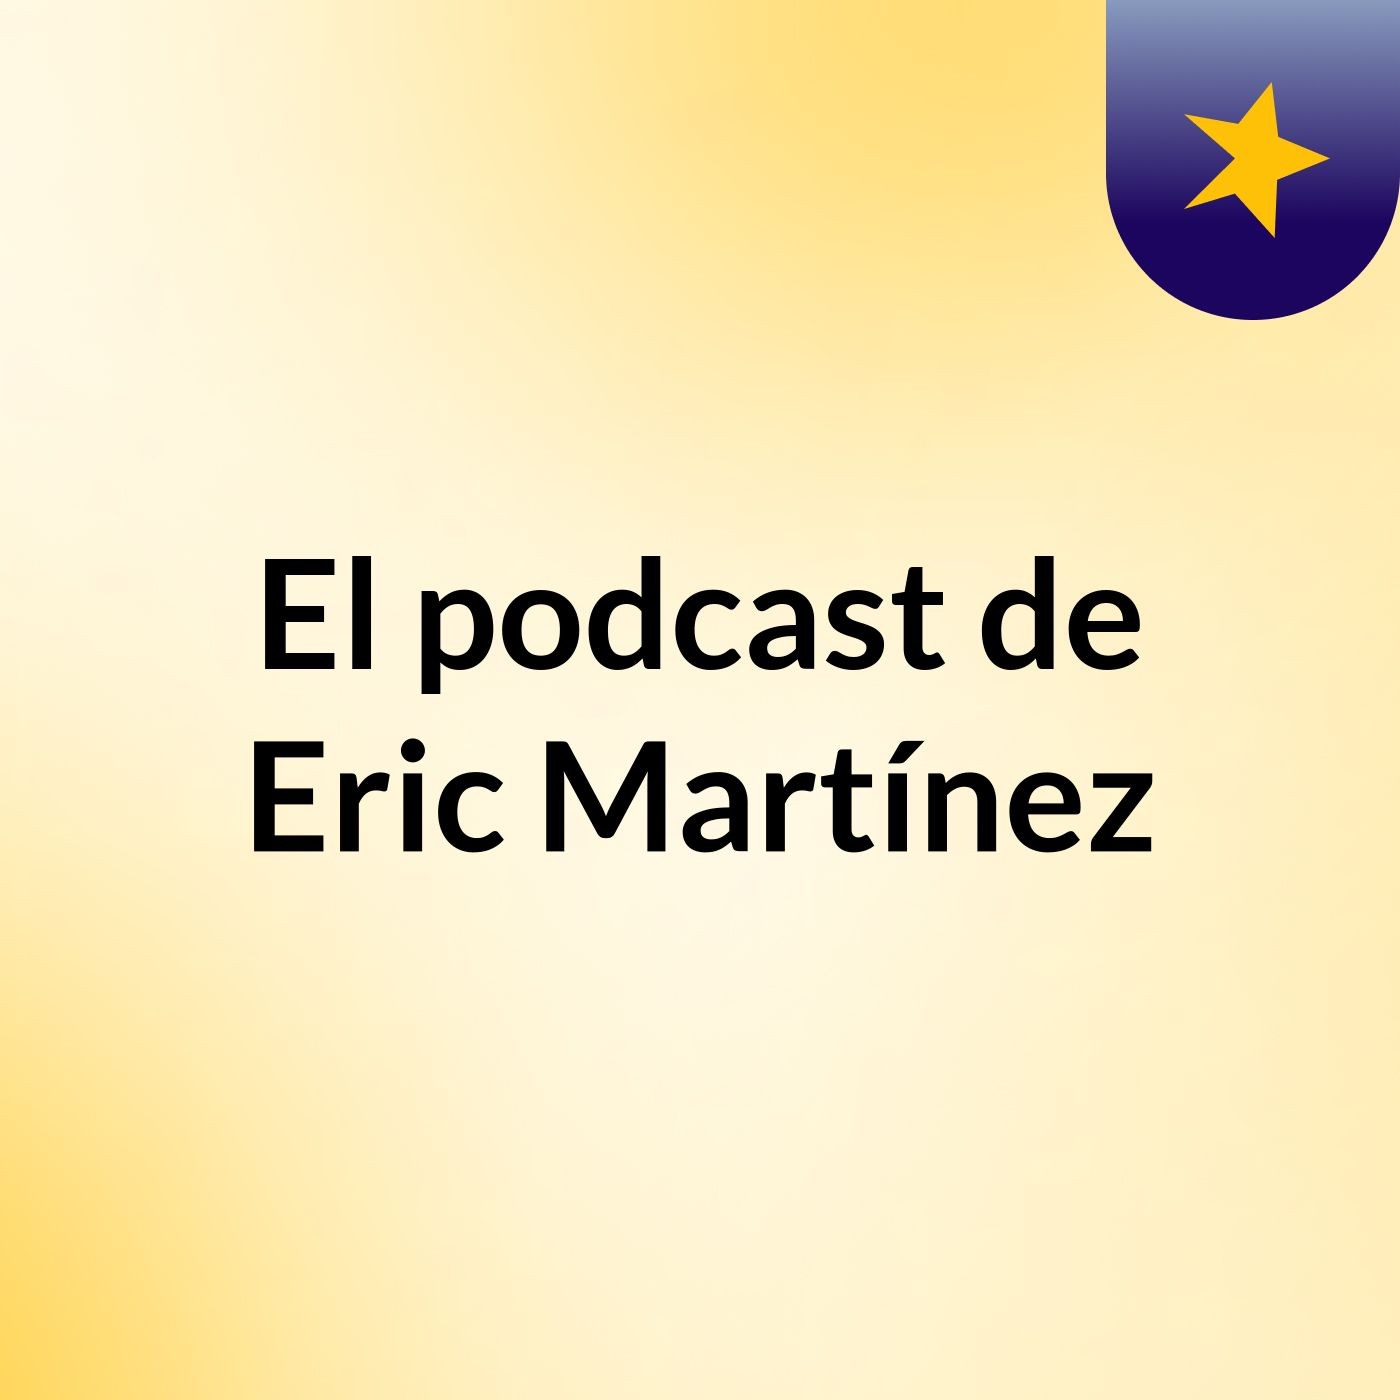 Episodifftto 3 - El podcast de Eric Martínez